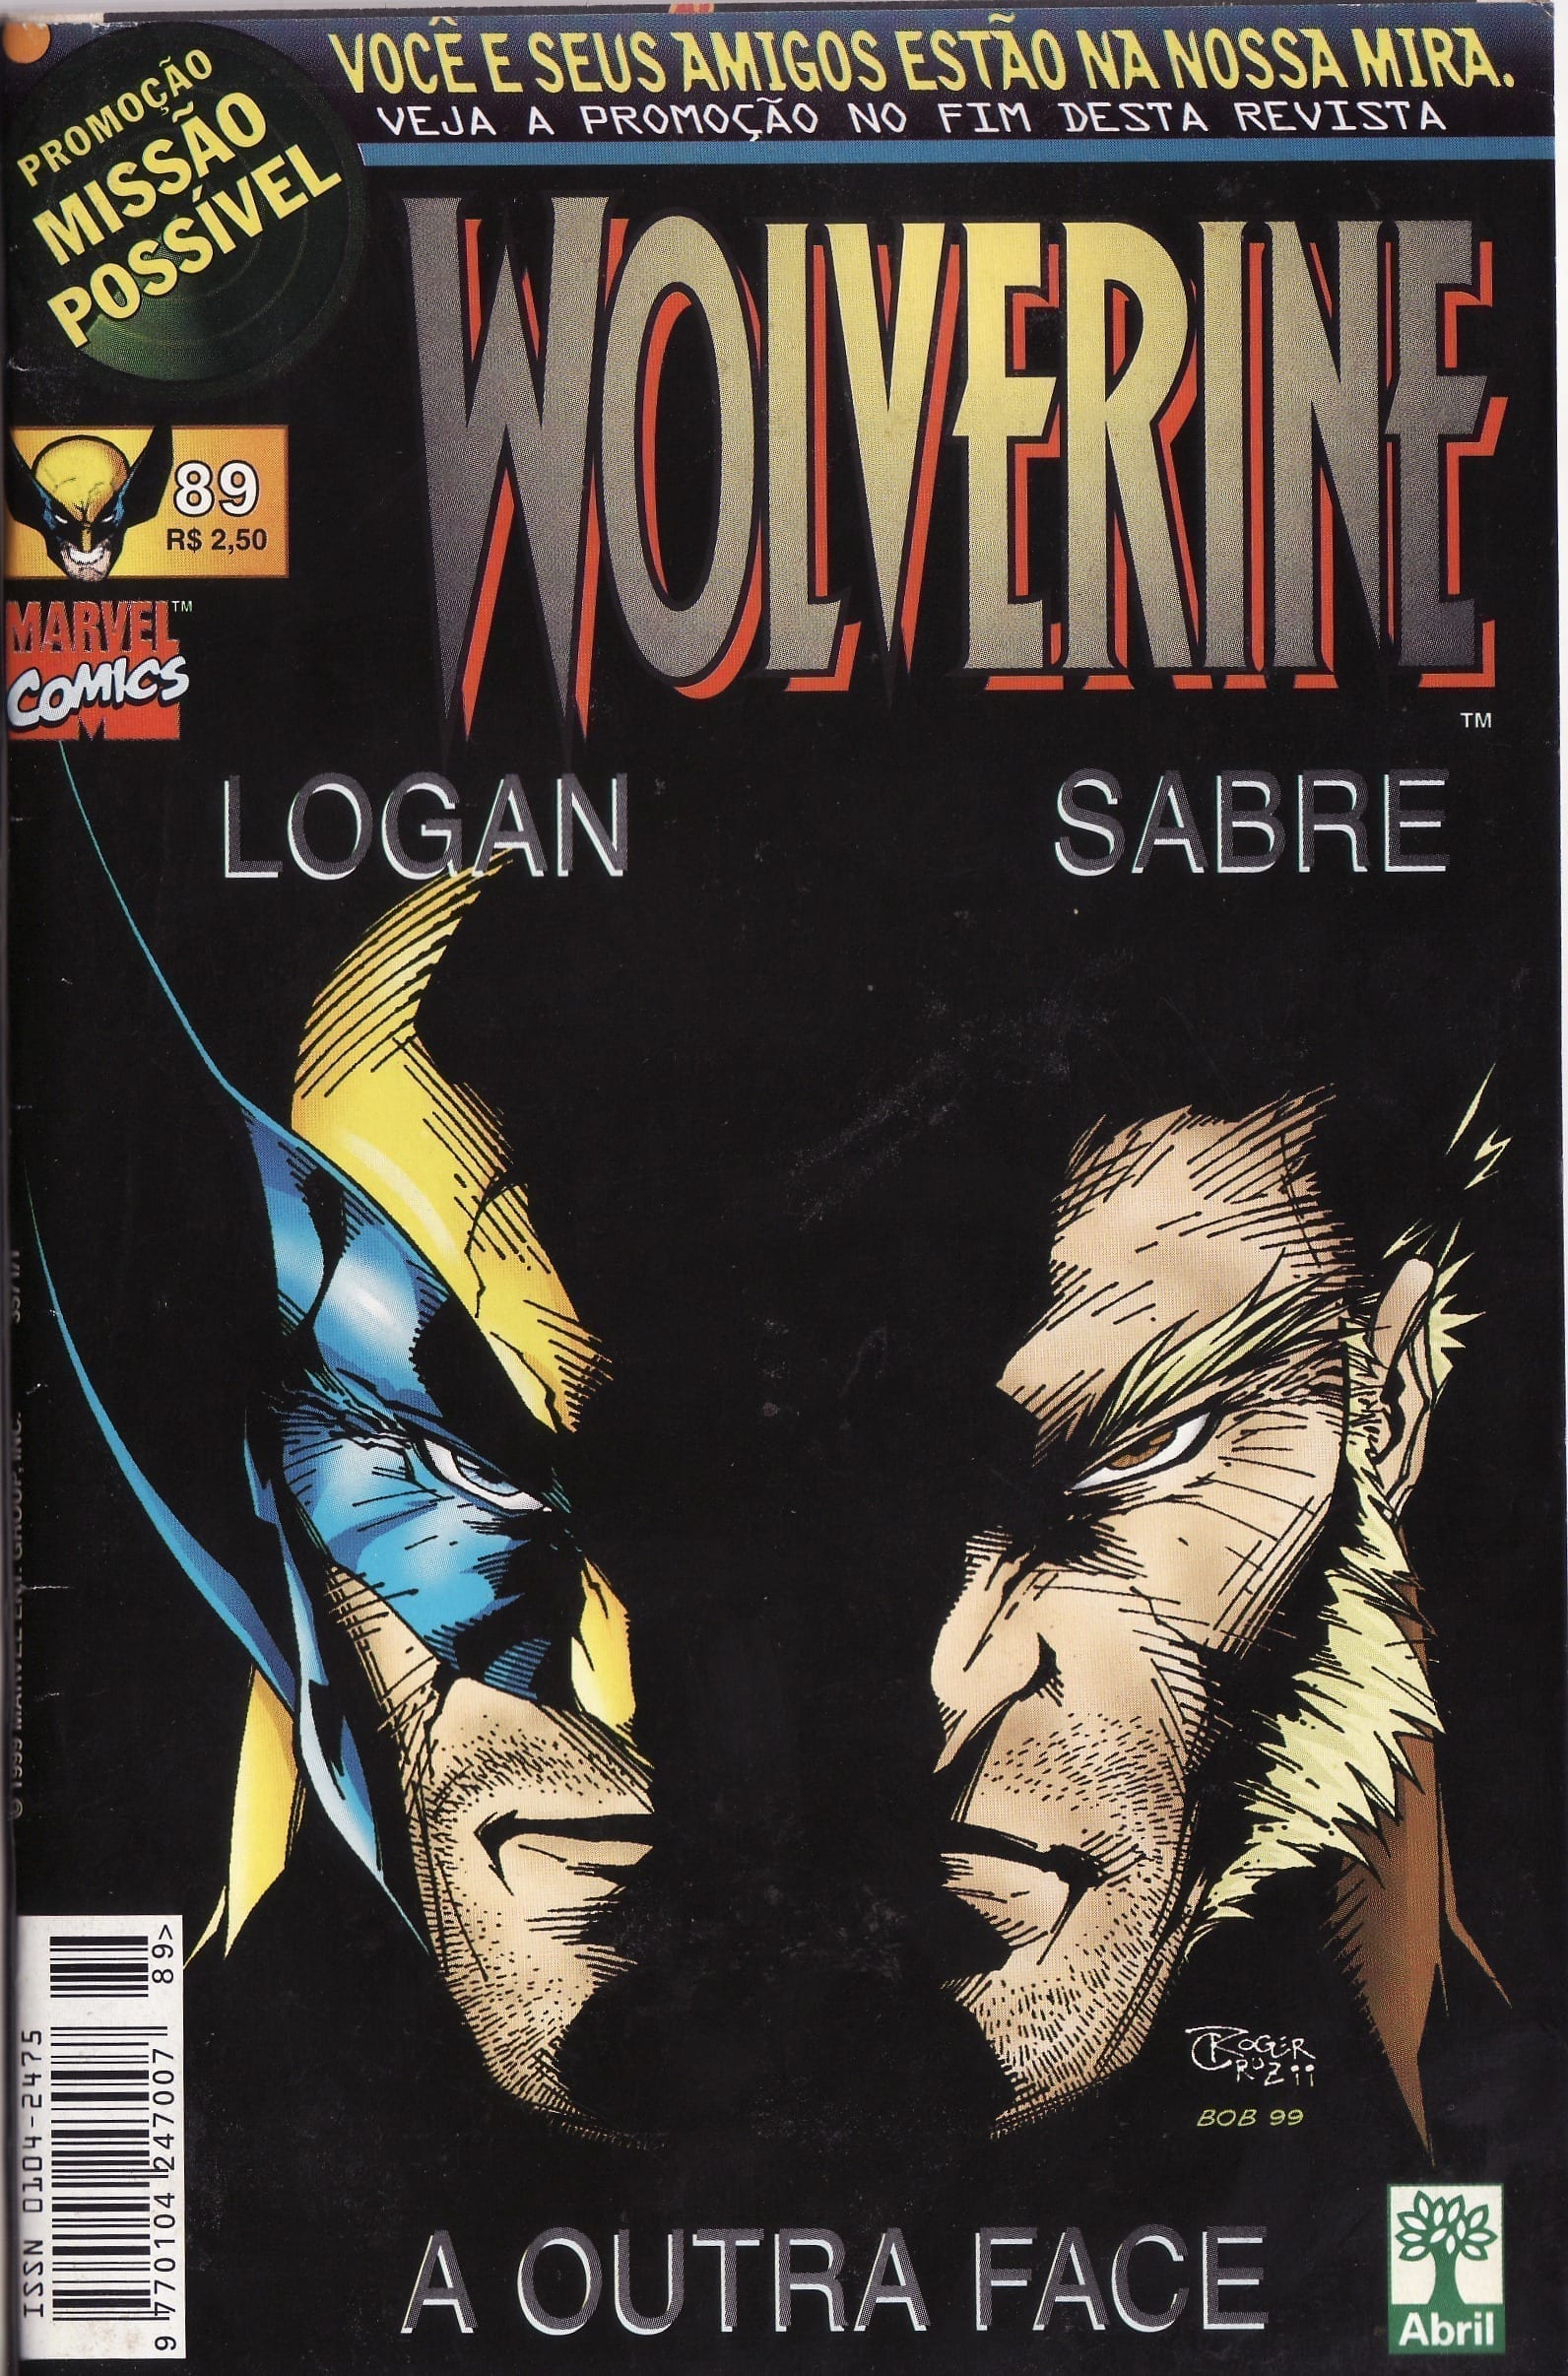 <span>Wolverine Abril 89</span>